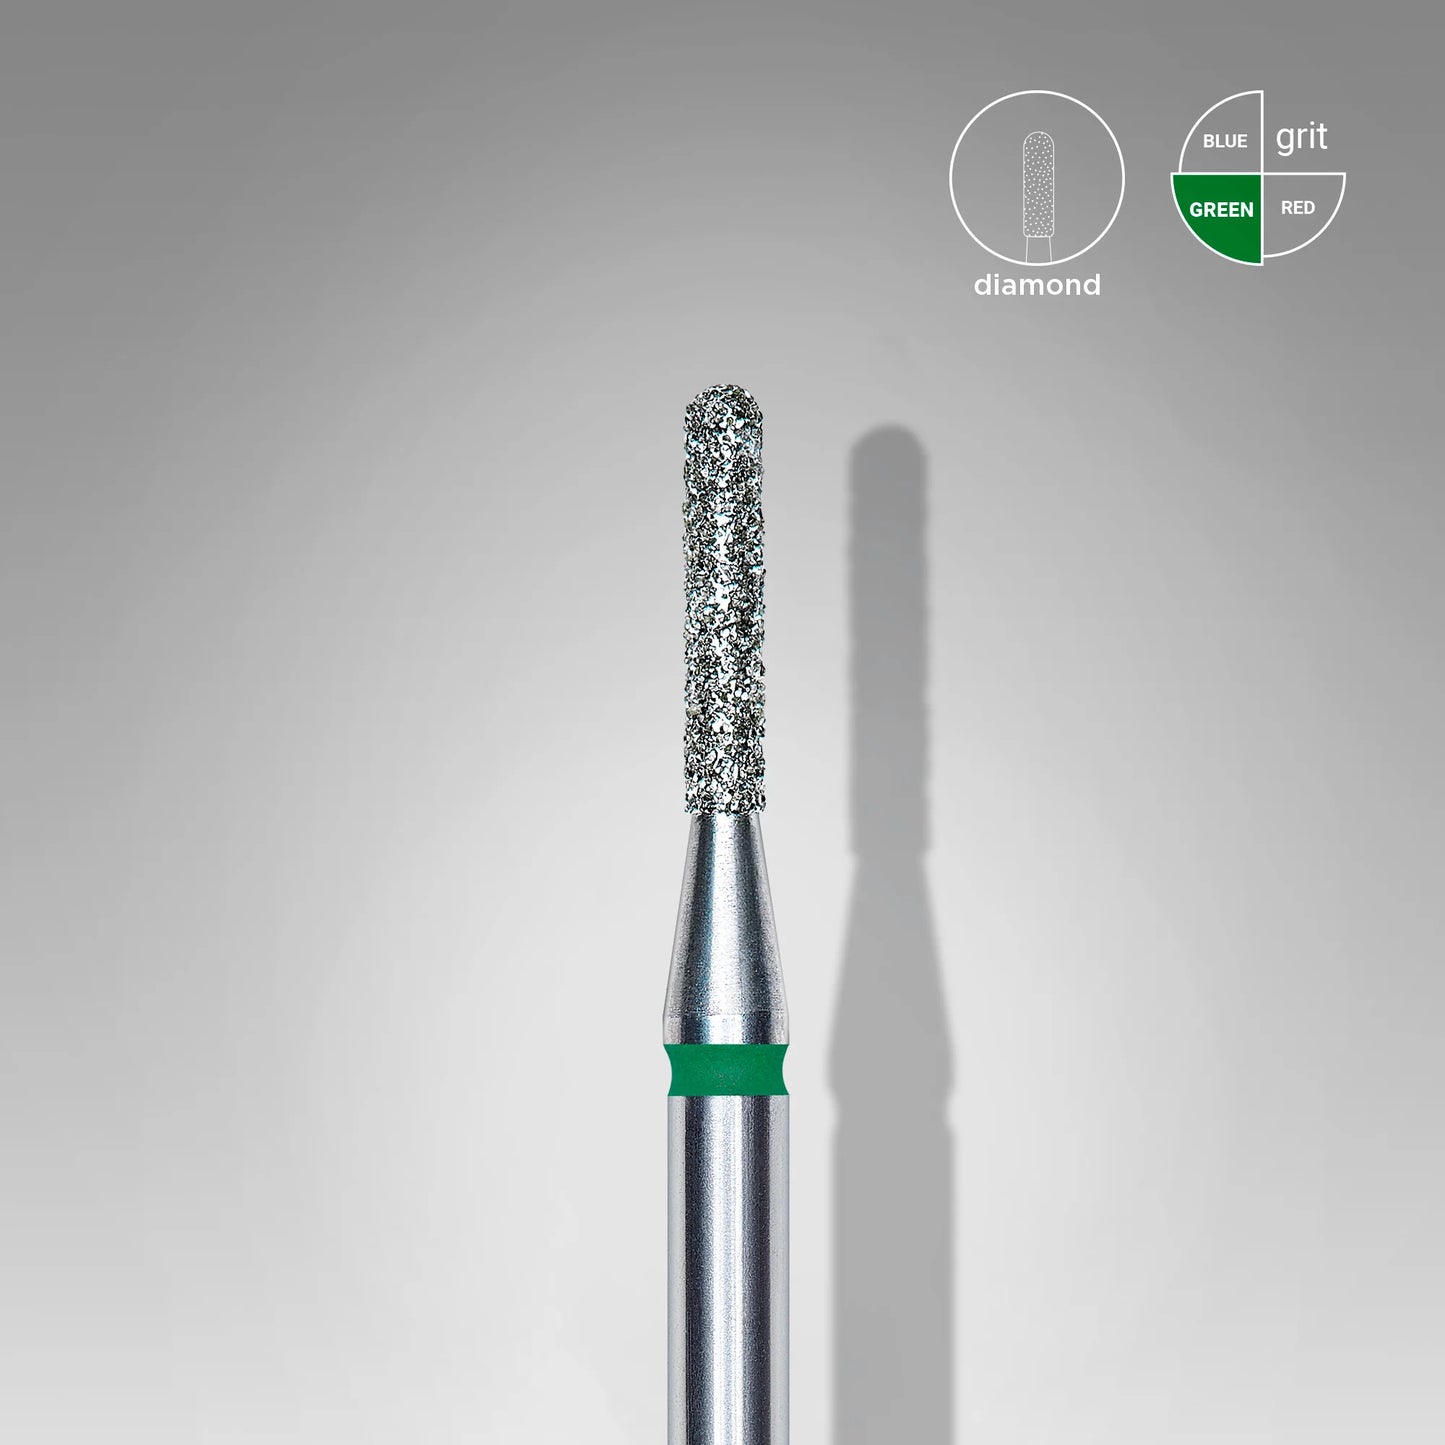 STALEKS Diamond Nail Drill Bit, Rounded "Cylinder", Green, Head Diameter 1.4 Mm, Working Part 8 Mm